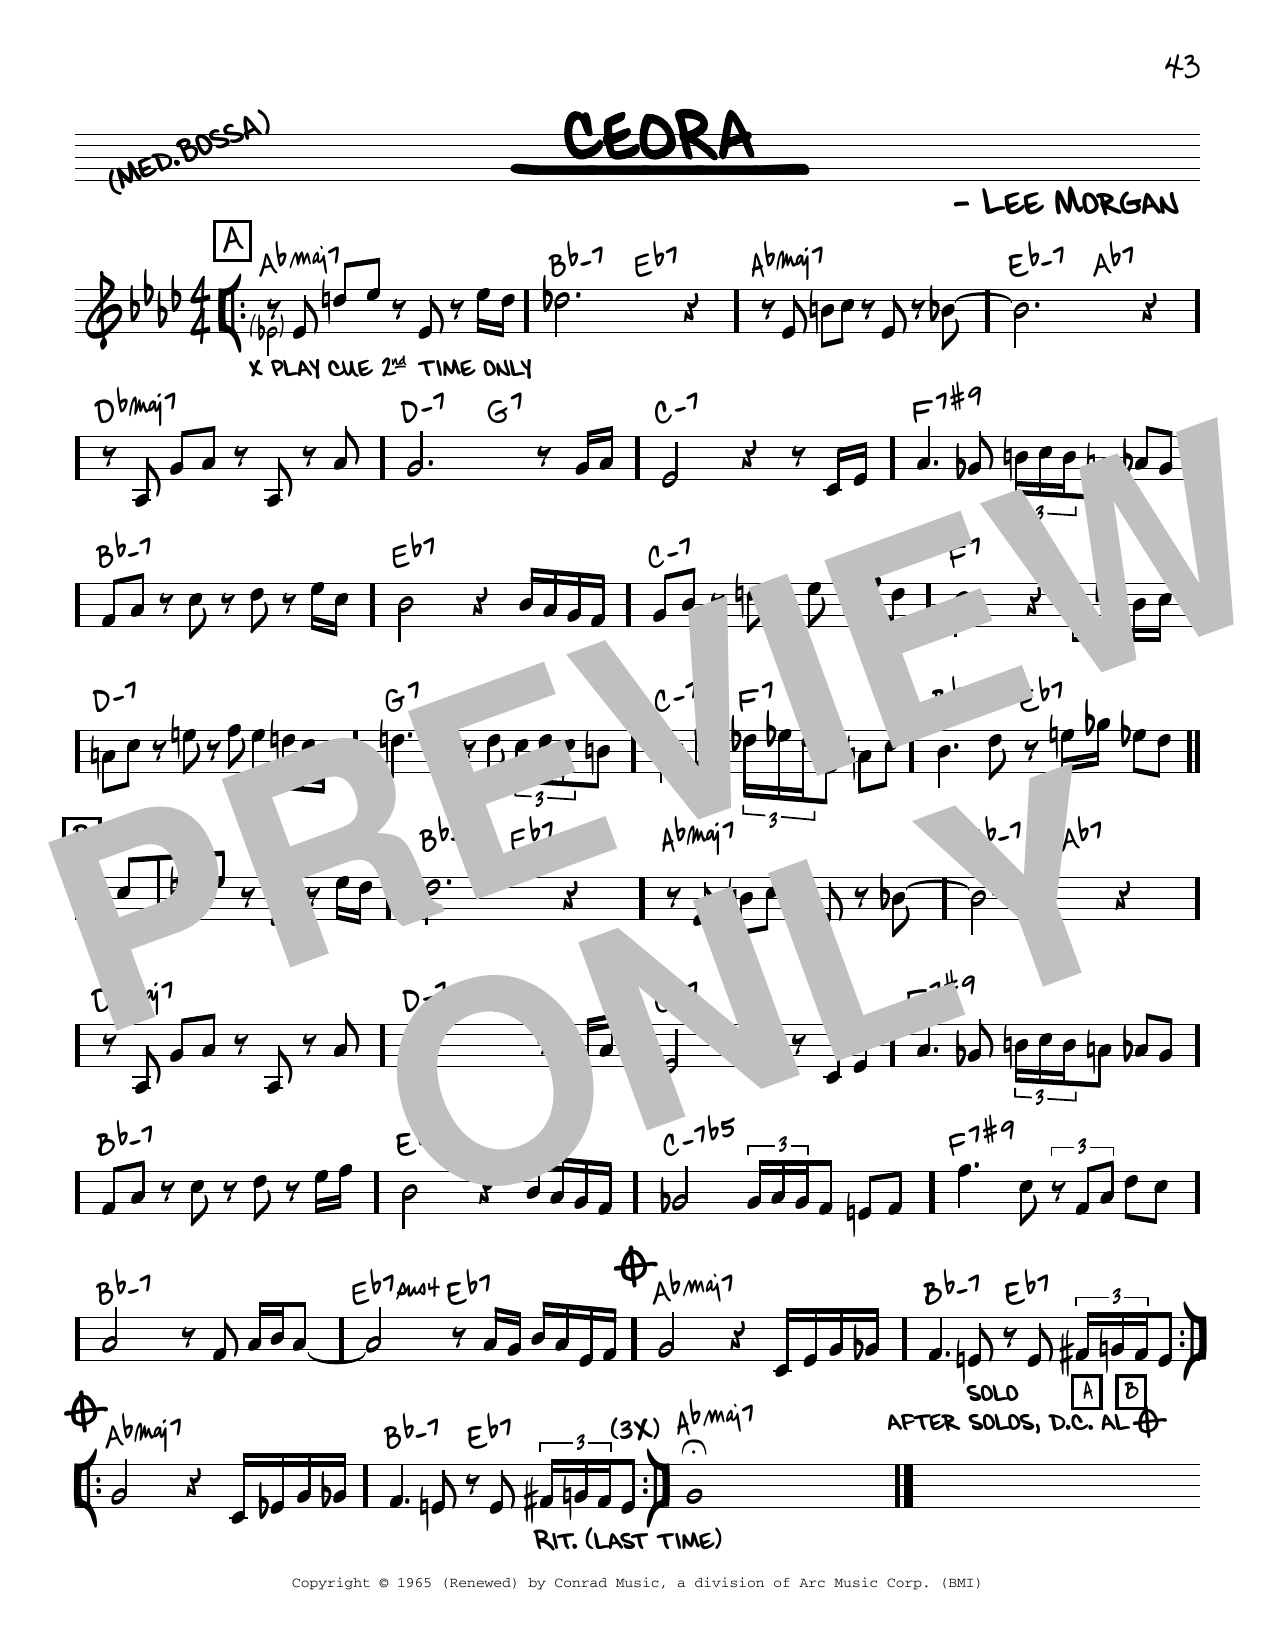 Lee Morgan Ceora Sheet Music Notes & Chords for Real Book - Melody & Chords - Eb Instruments - Download or Print PDF